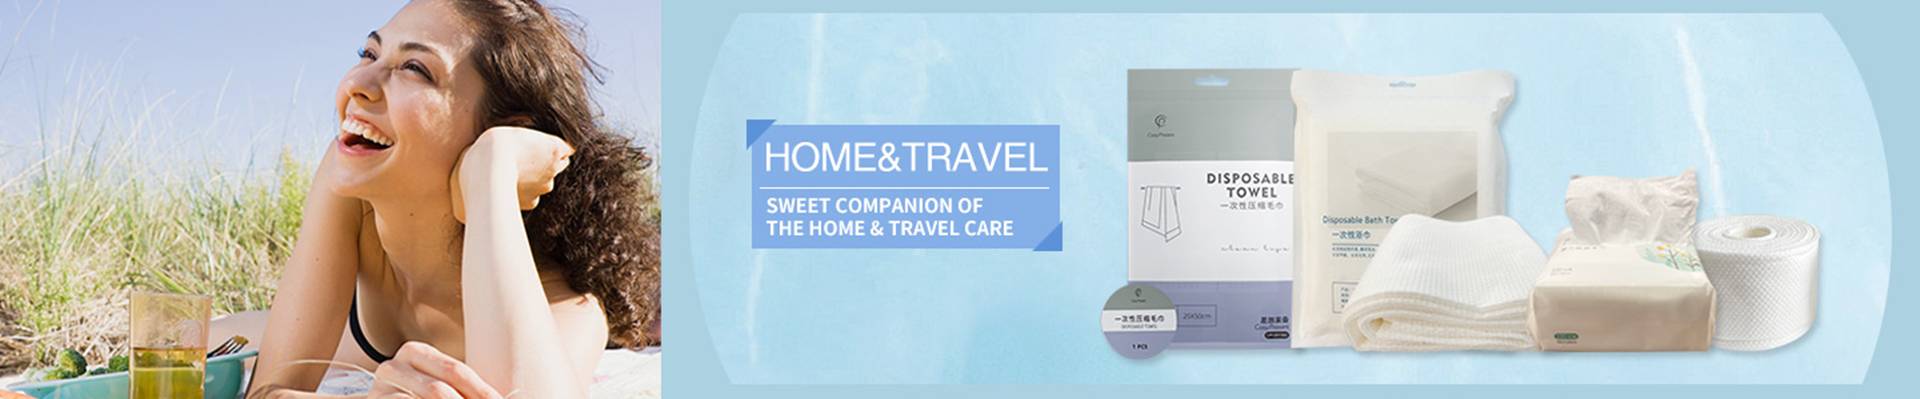 Home & Travel health Care